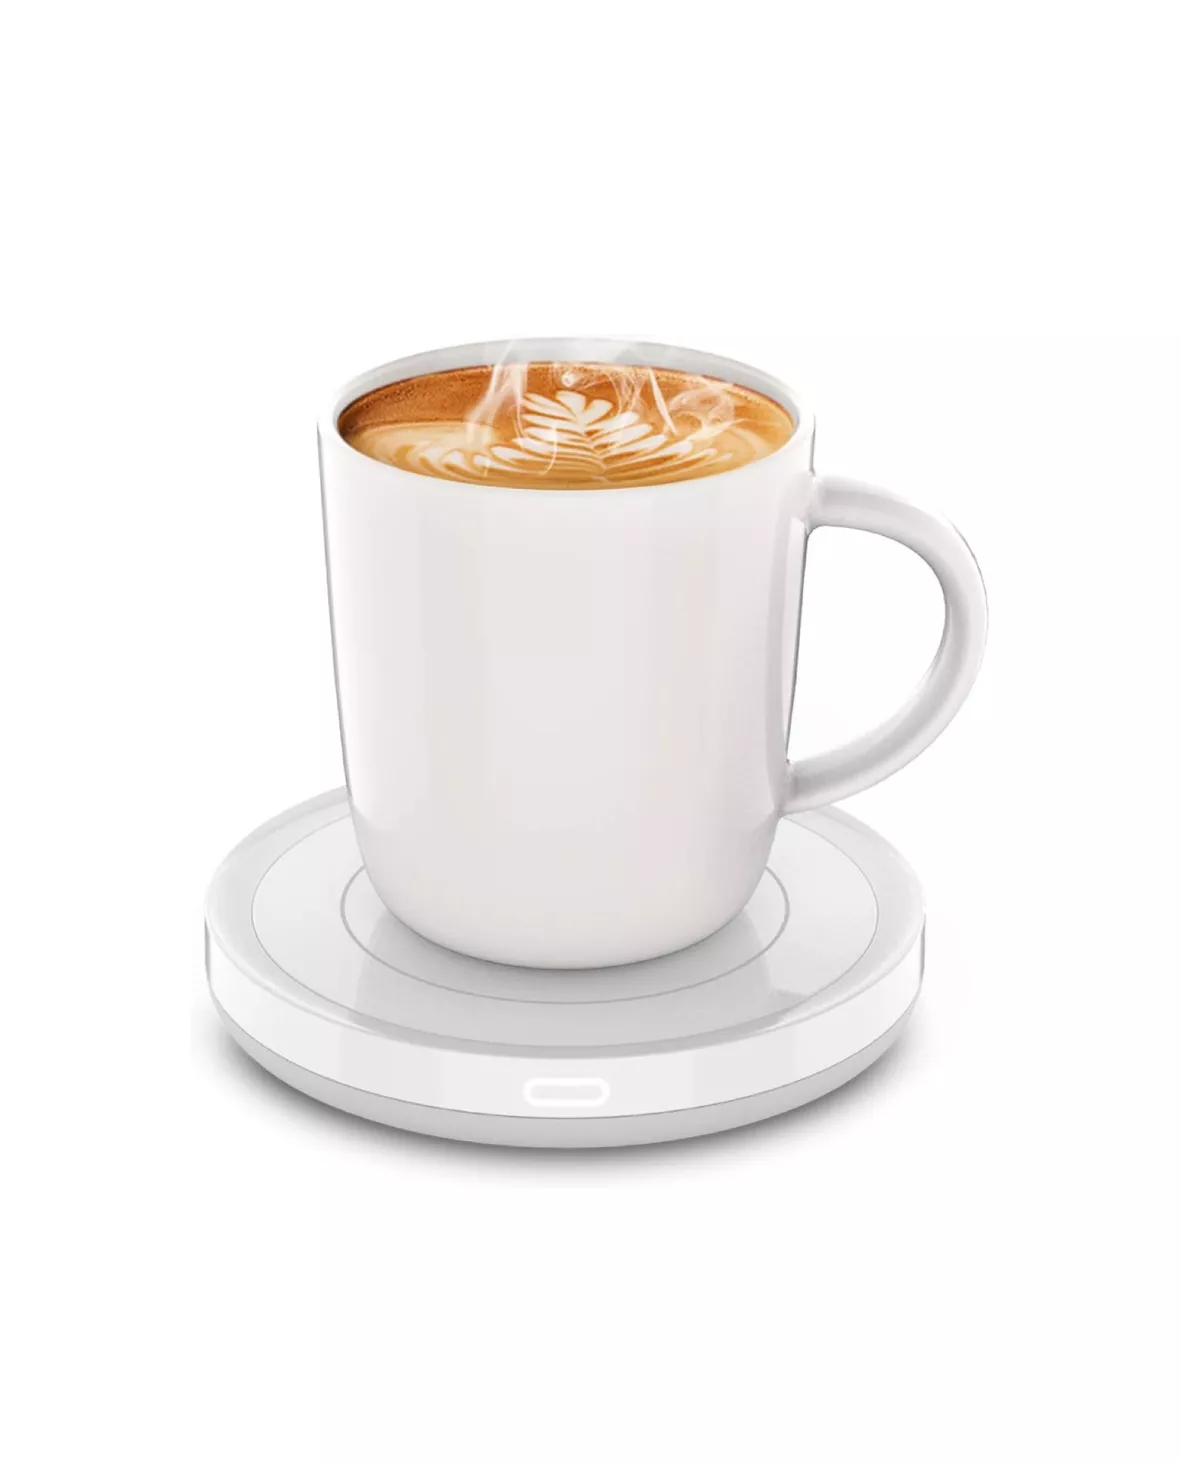 Smart Coffee Warmer, BESTINNKITS … curated on LTK